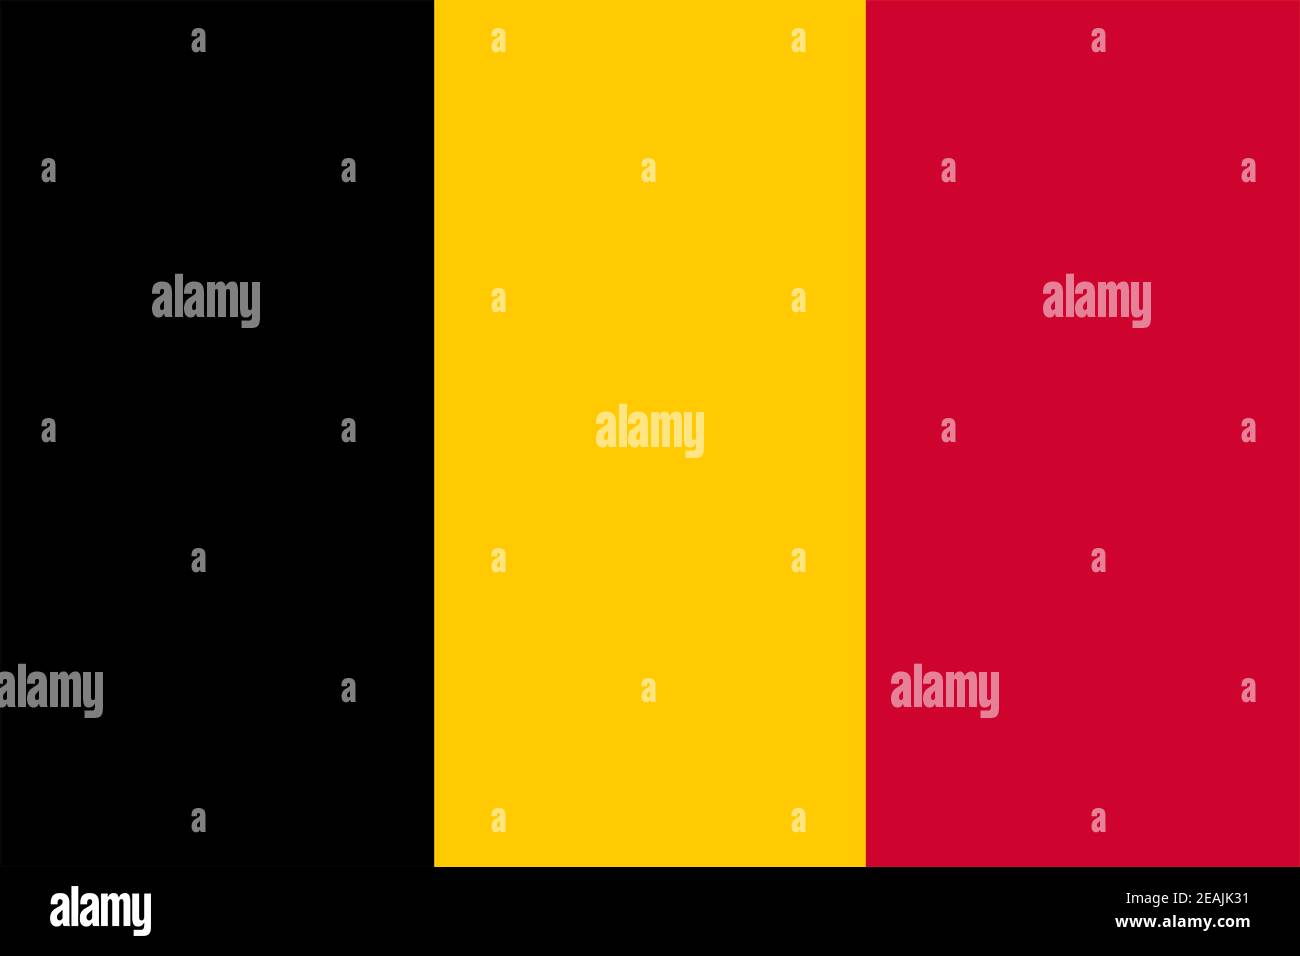 Belgium flag black yellow red tricolor background illustration Stock Photo